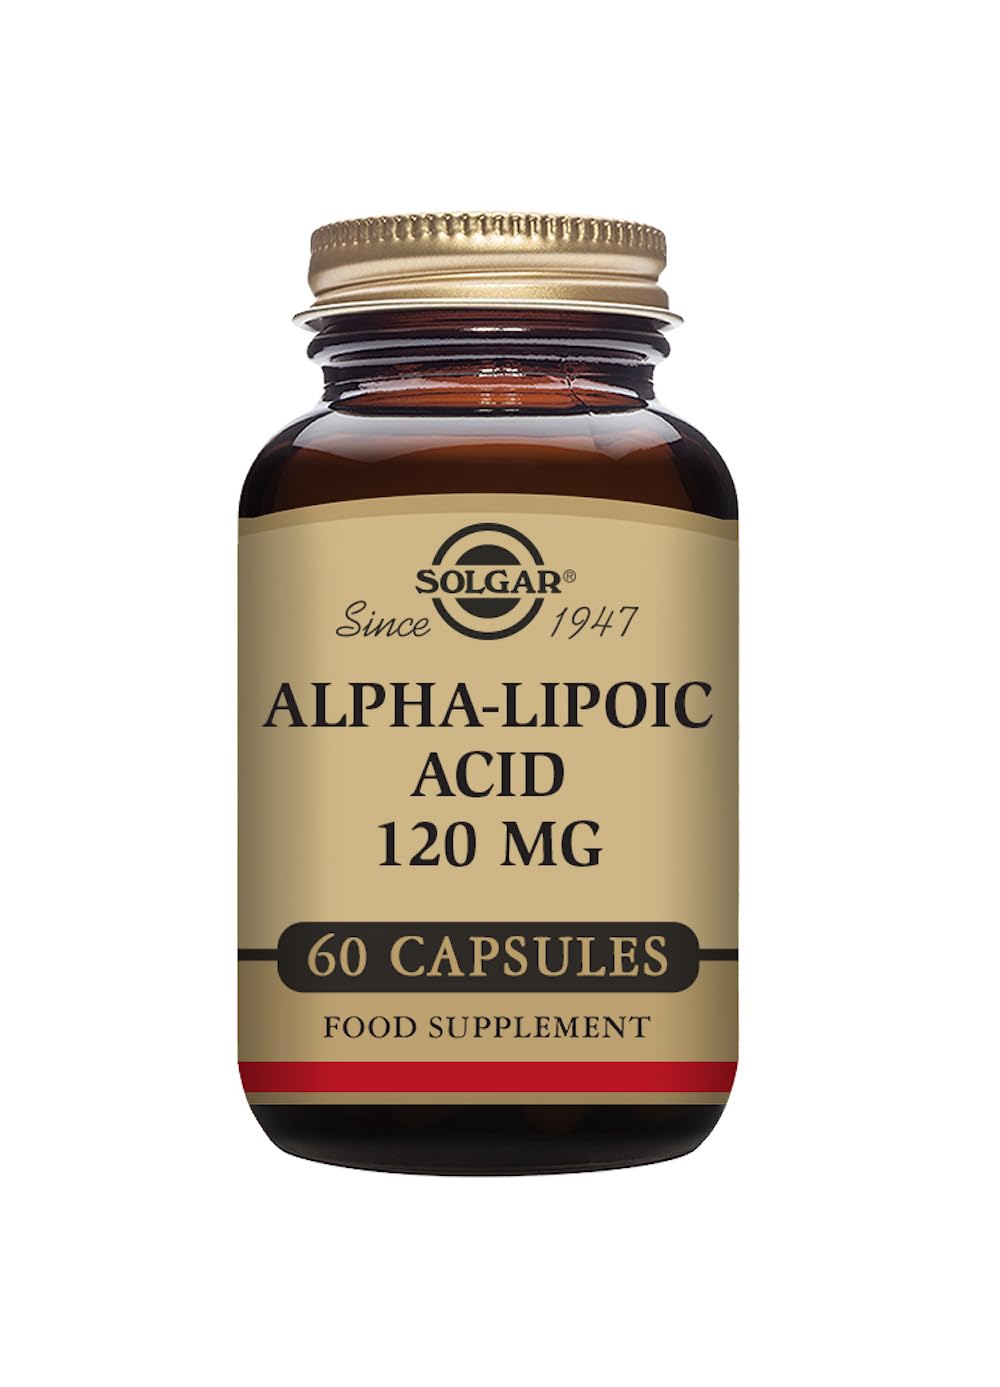 [Australia] - Solgar Alpha-Lipoic Acid 120 mg Vegetable Capsules - Fatty Acid Health Supplement - Free From Sugar, Salt & Starch - Vegan, Vegetarian, Kosher, Halal - Pack of 60 